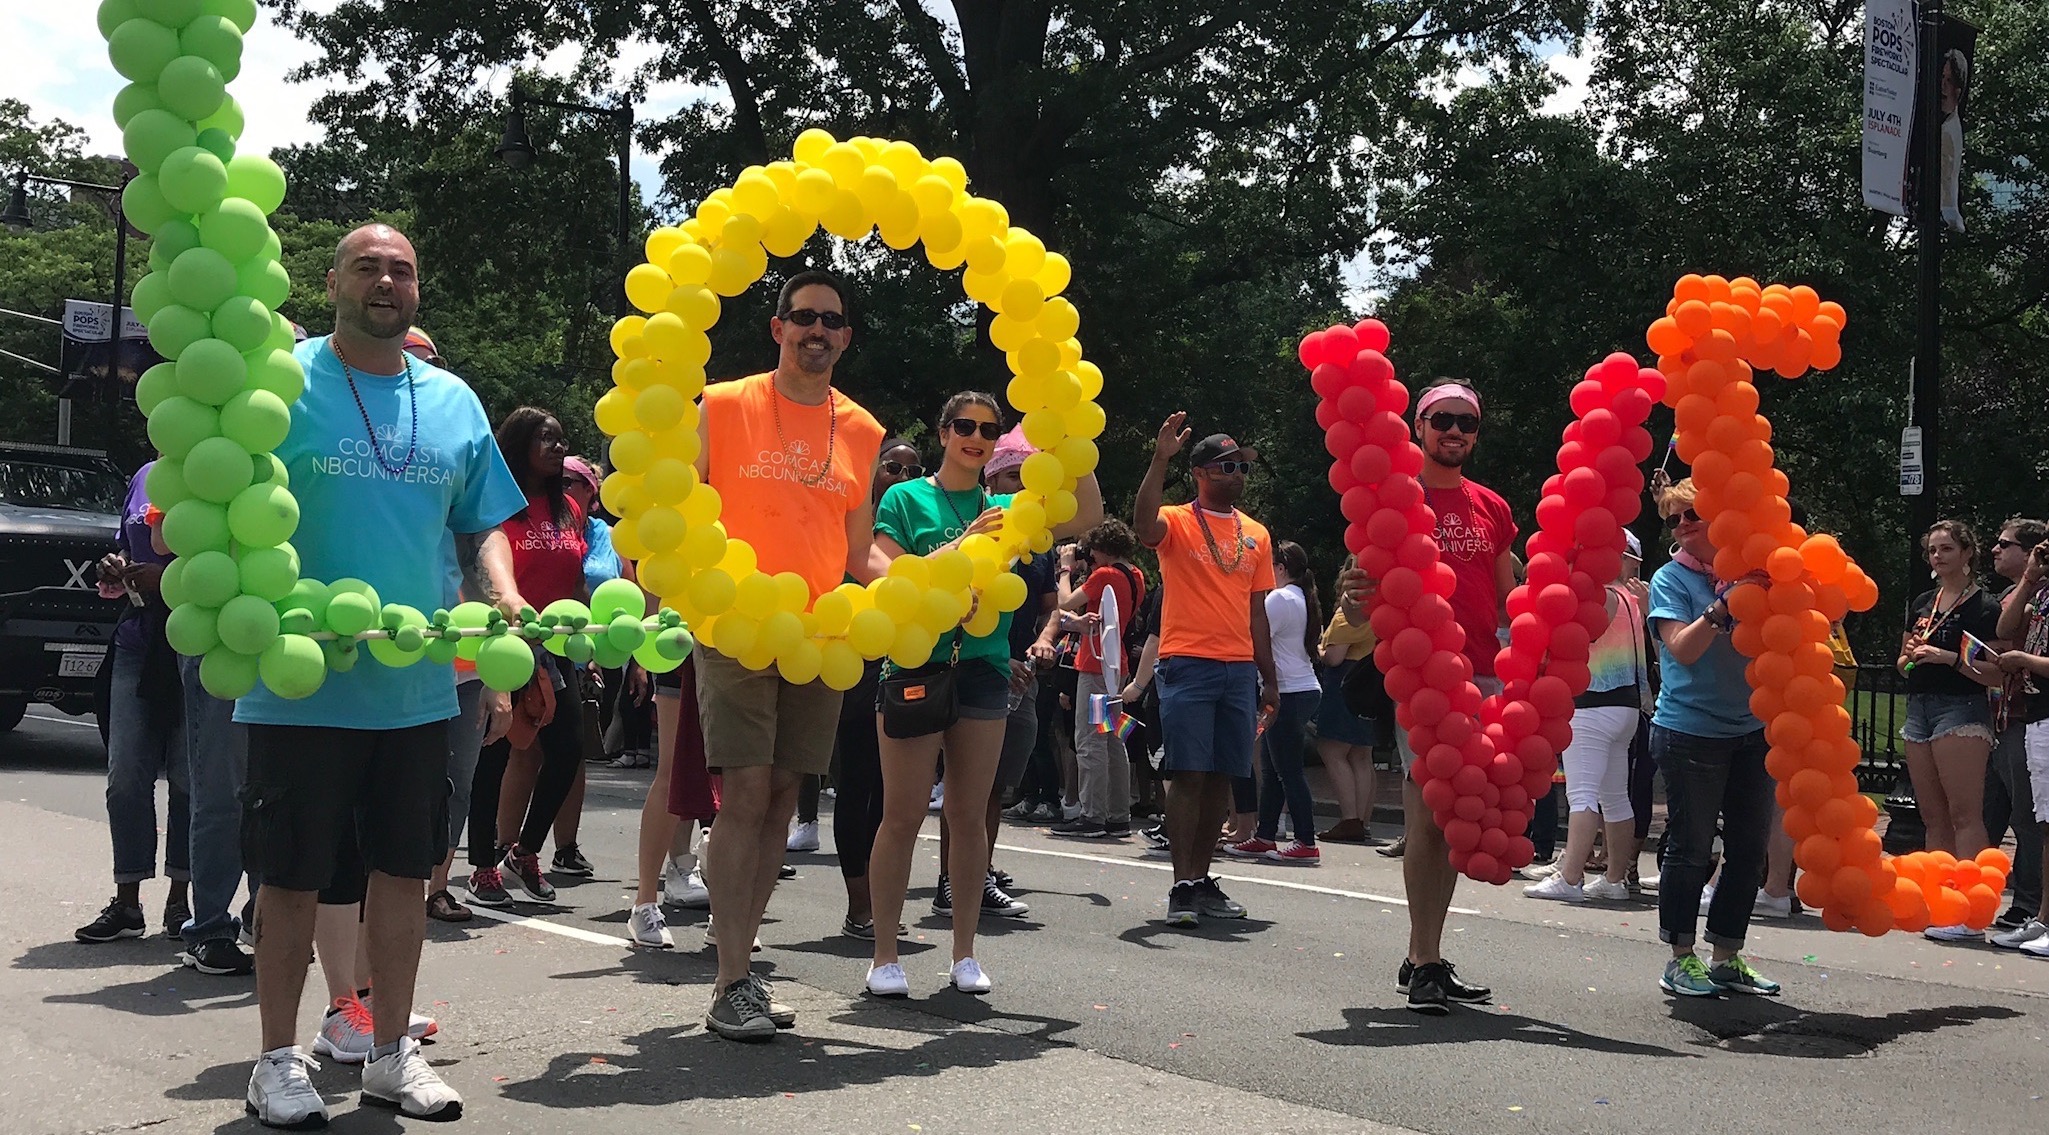 Boston Pride 50th anniversary: Festival goes virtual, parade